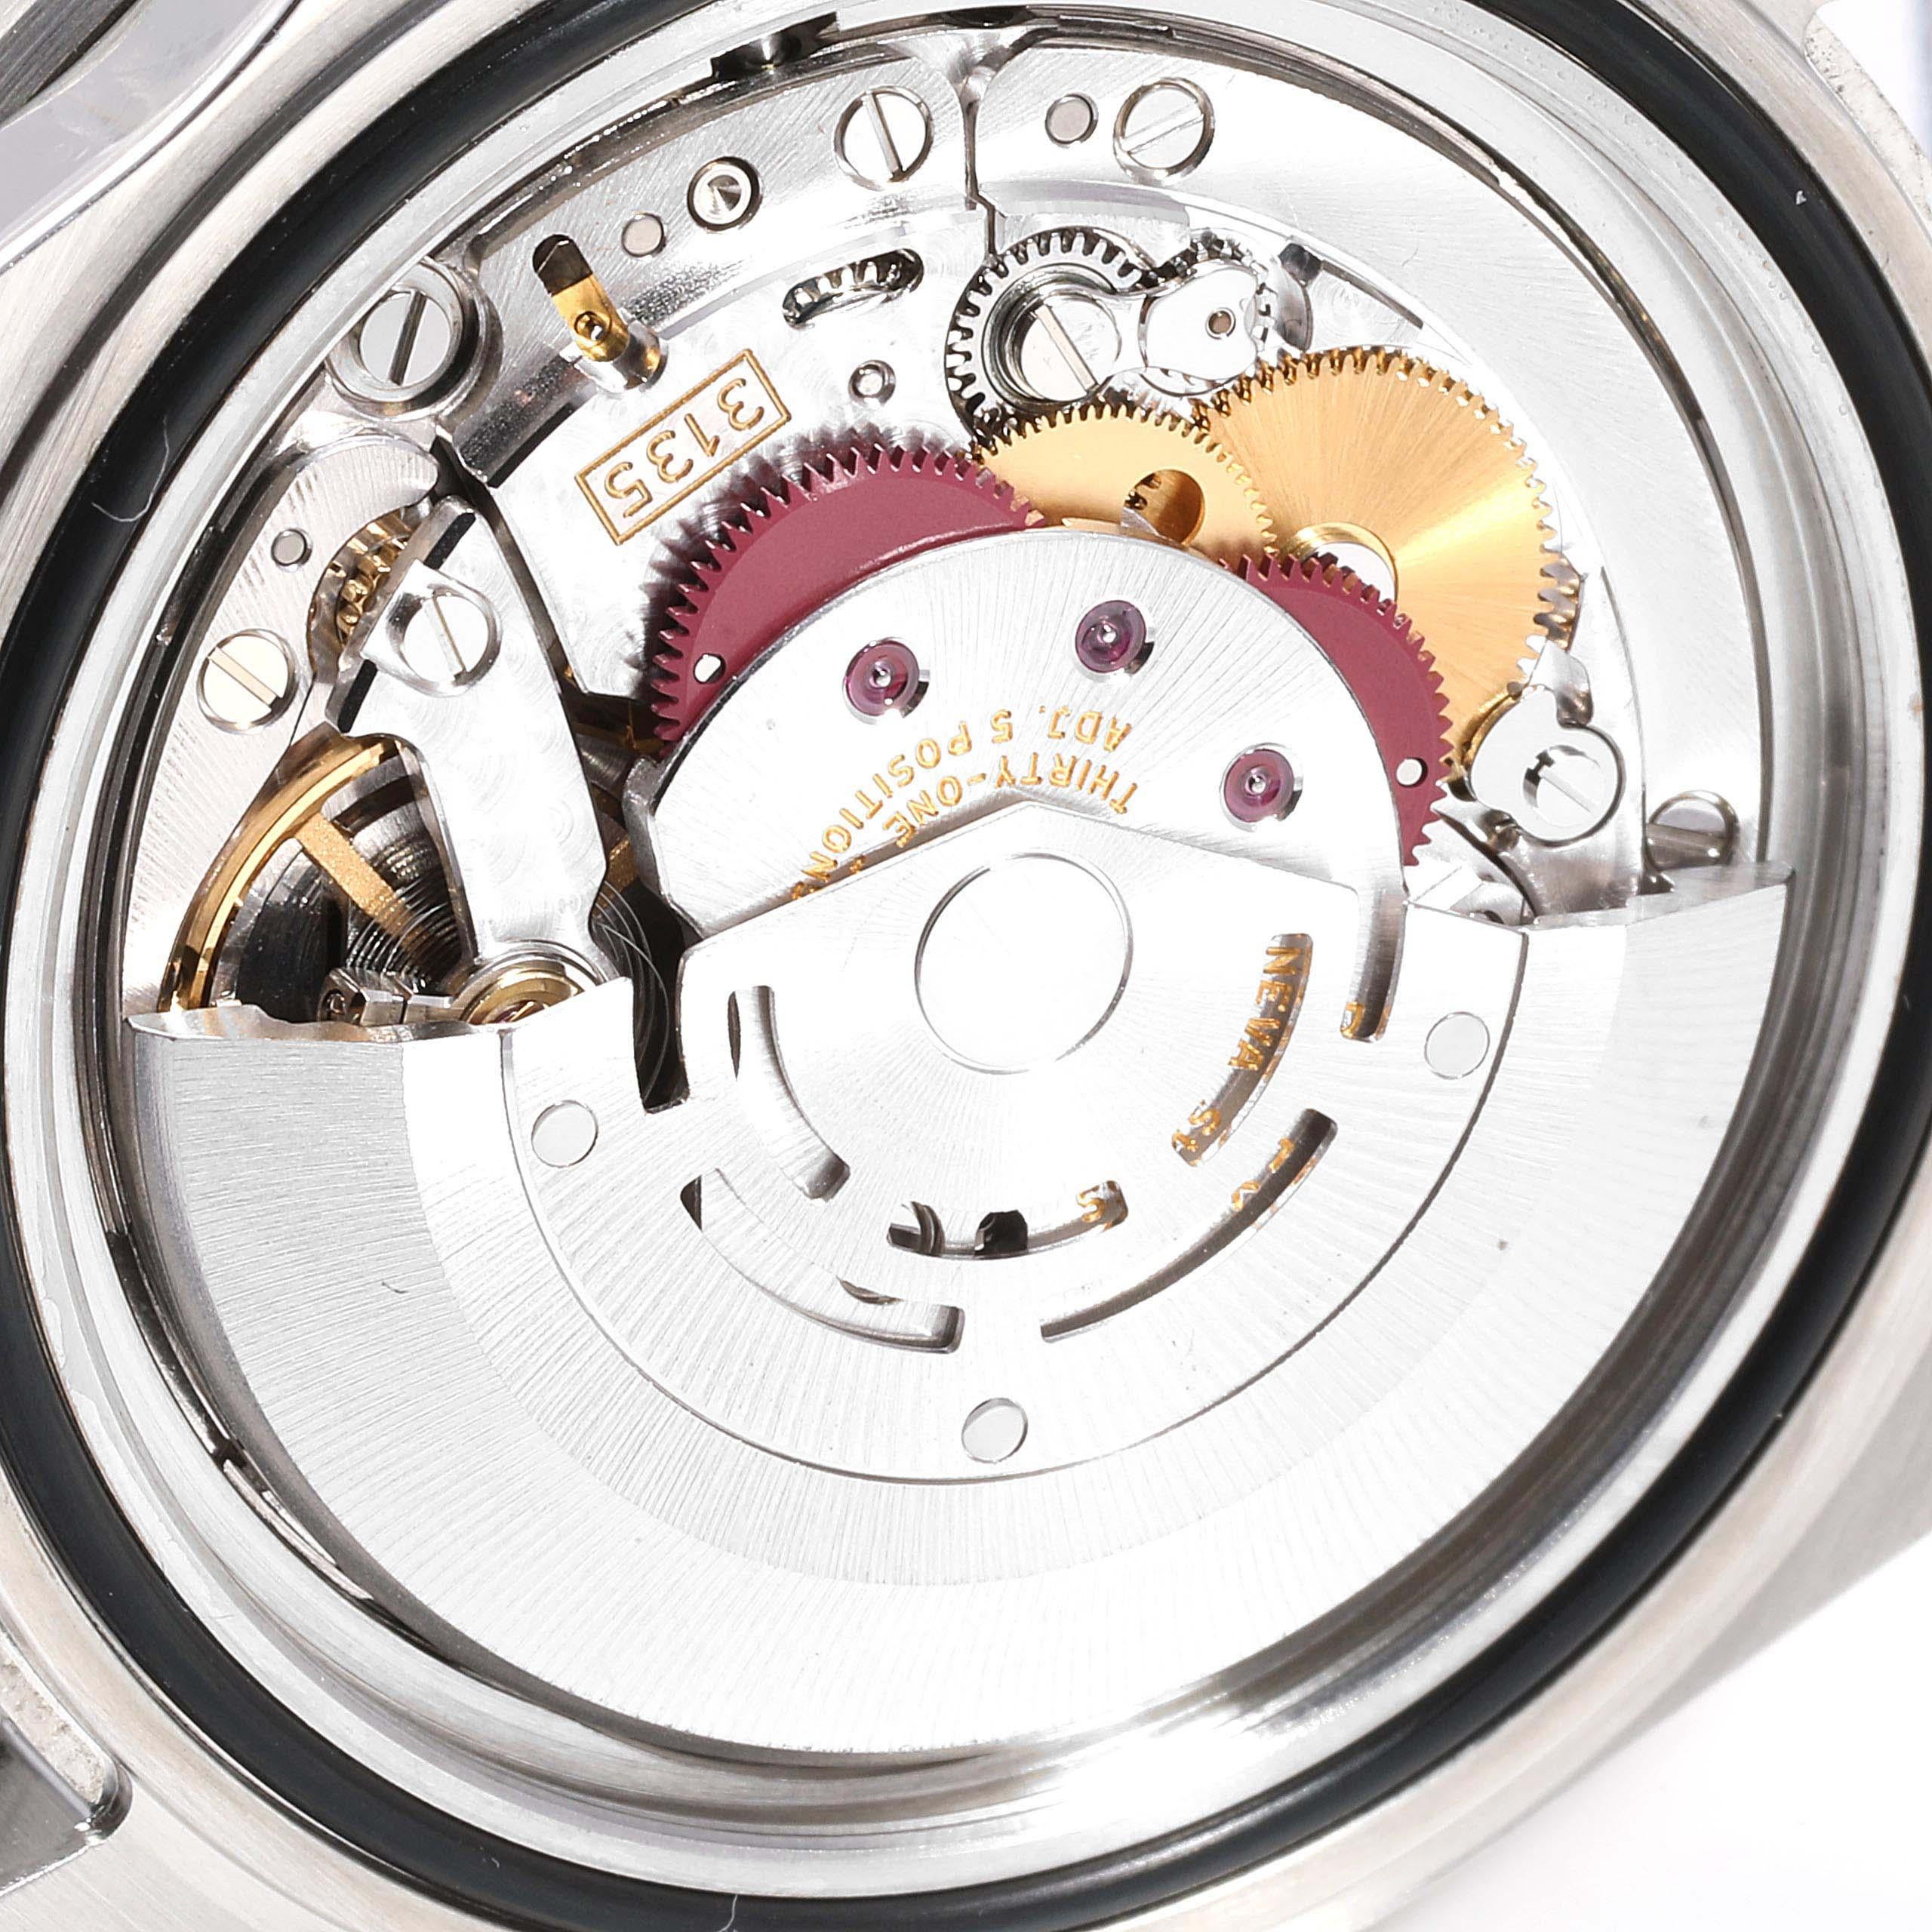 Rolex Submariner Date Stainless Steel Men's Watch 16610 Box Card 4